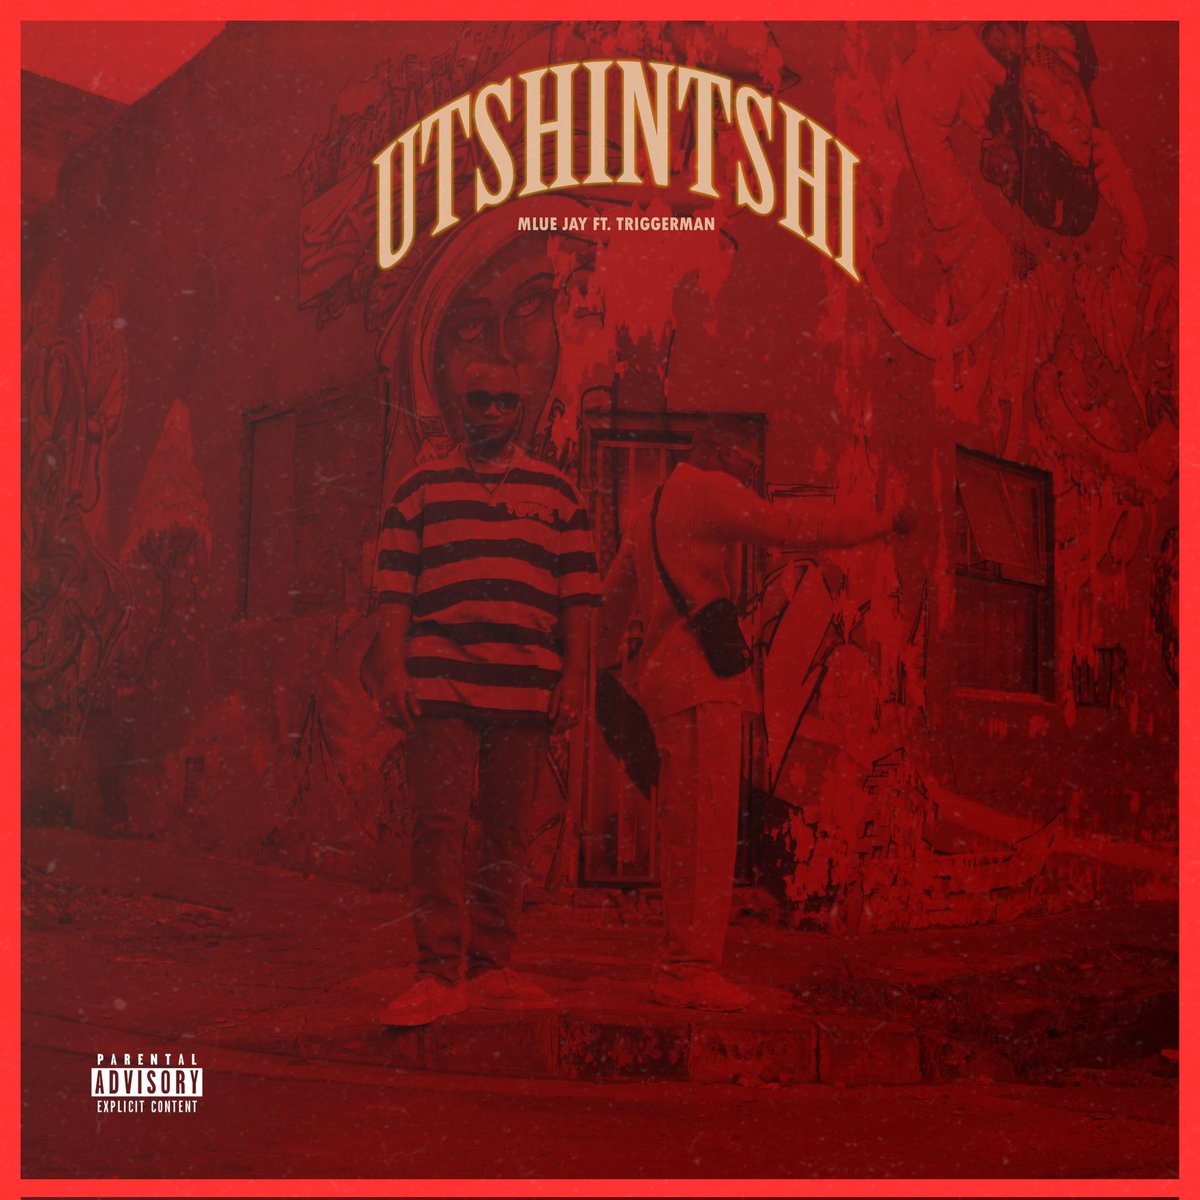 New Music Alert:🔥STREAM my latest single #UTSHINTSHI 🔗: song.link/utshintshi #MlueJay #UMSAPHAZI